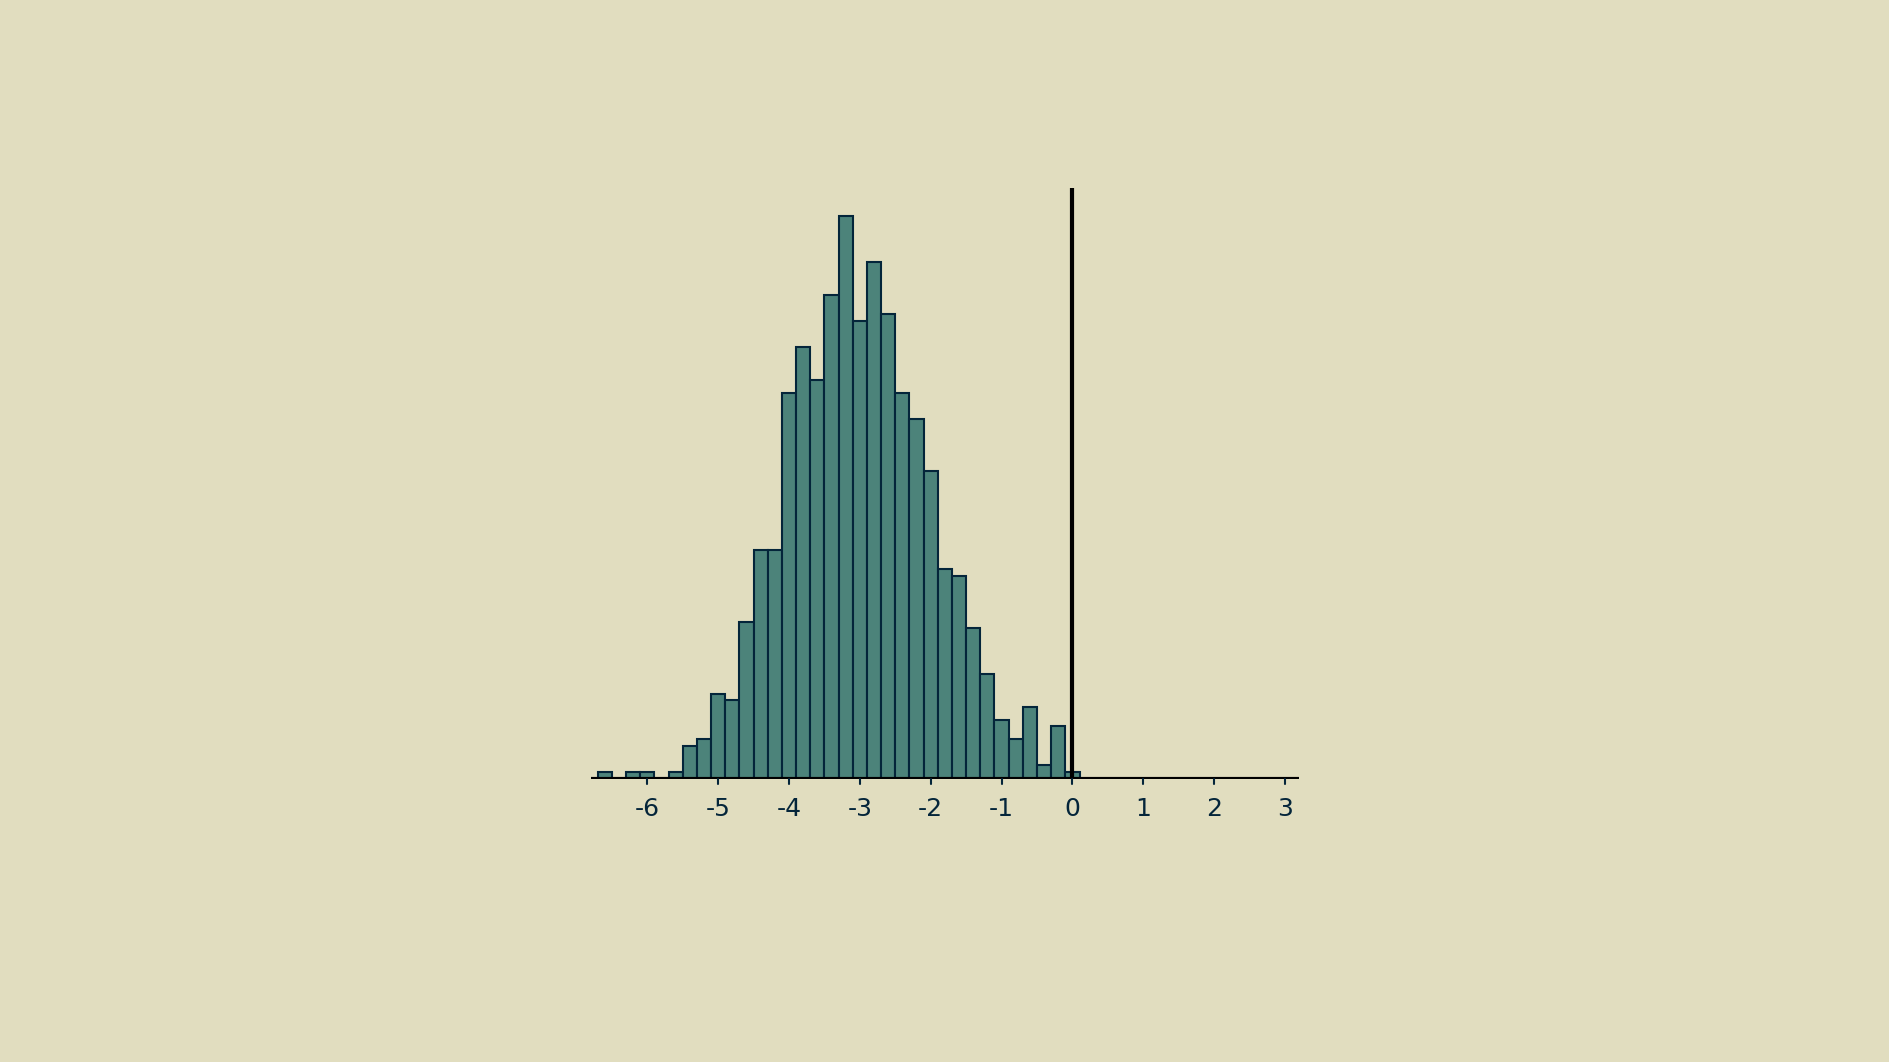 A normal distribution with a non-zero mean